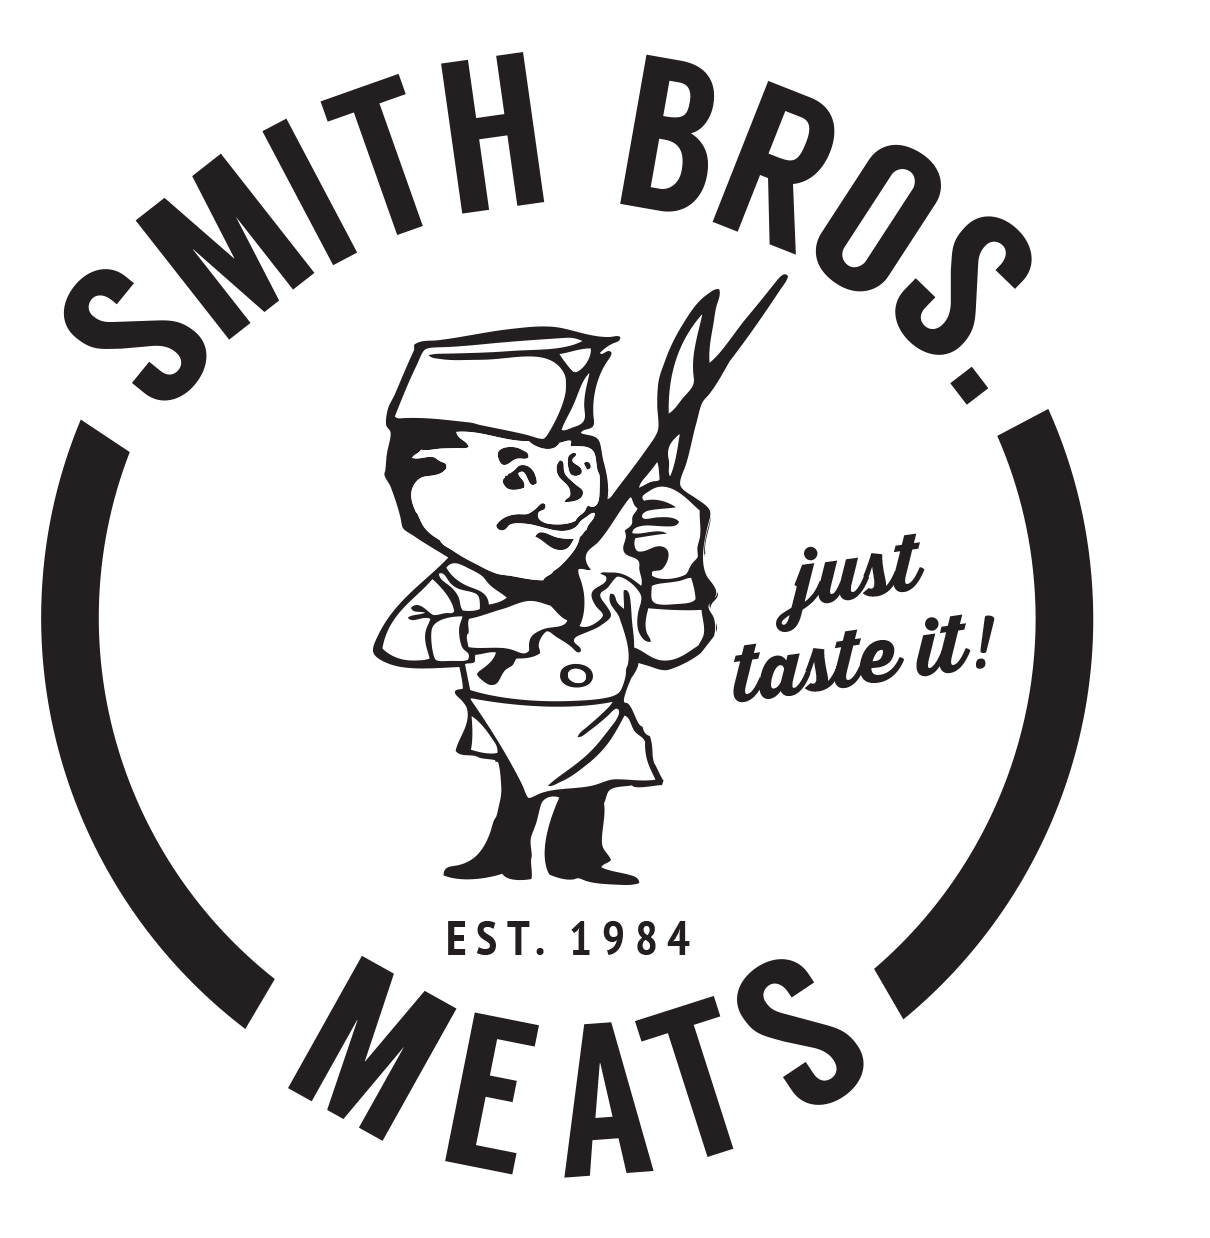 Smith Bros. Meats